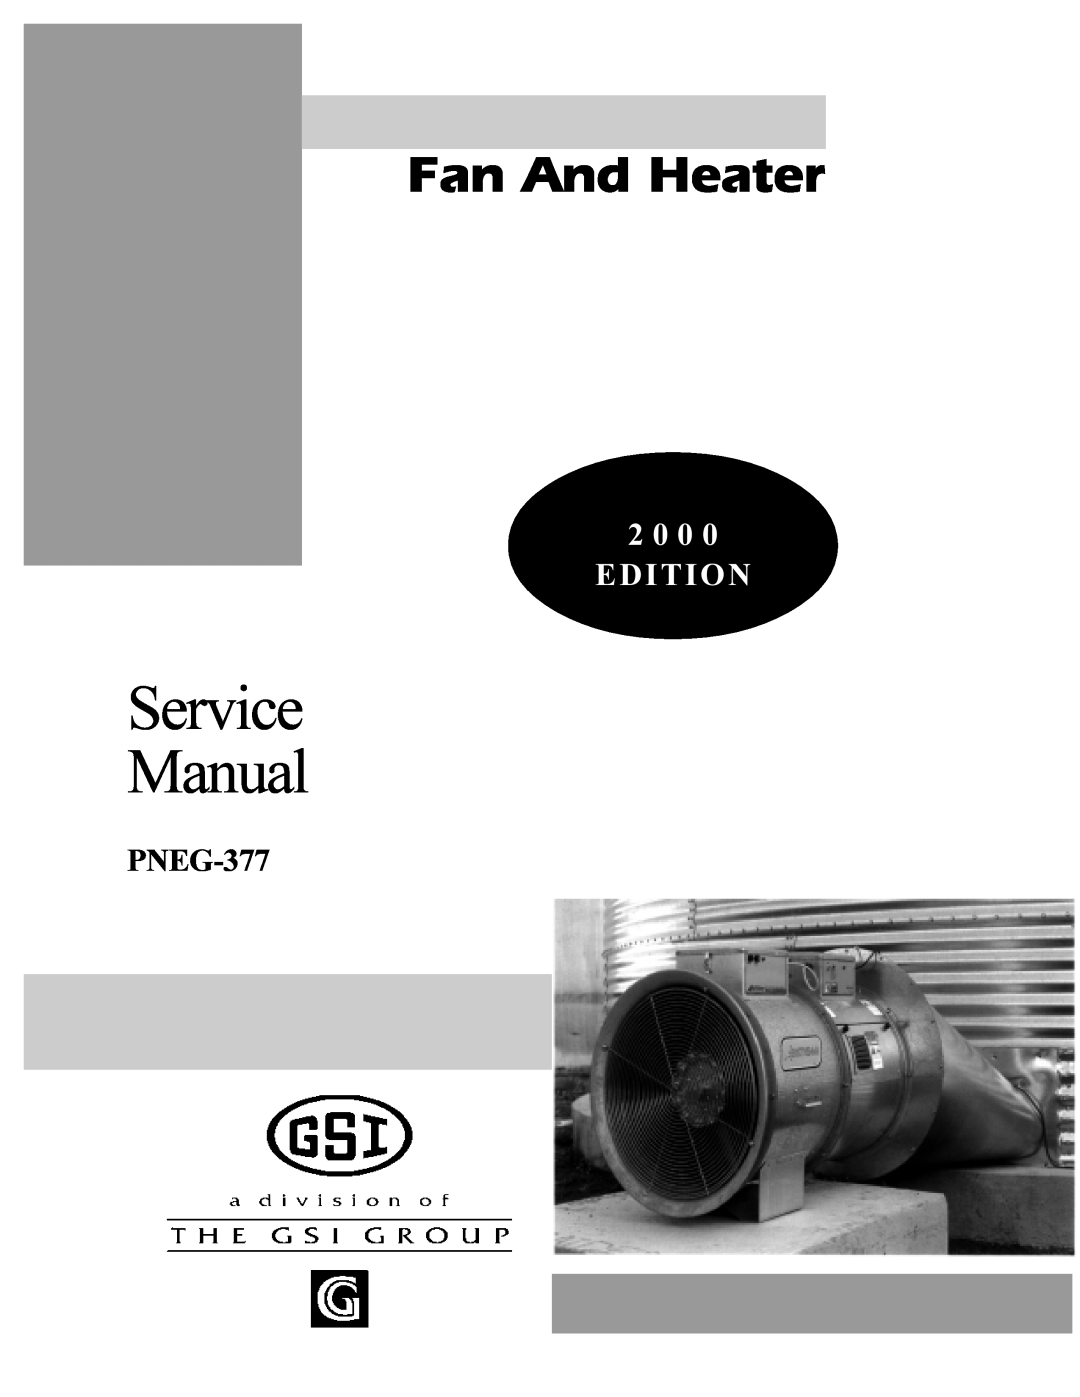 GSI Outdoors PNEG-377 service manual Service Manual, Fan And Heater, 2 0 0 EDITION 